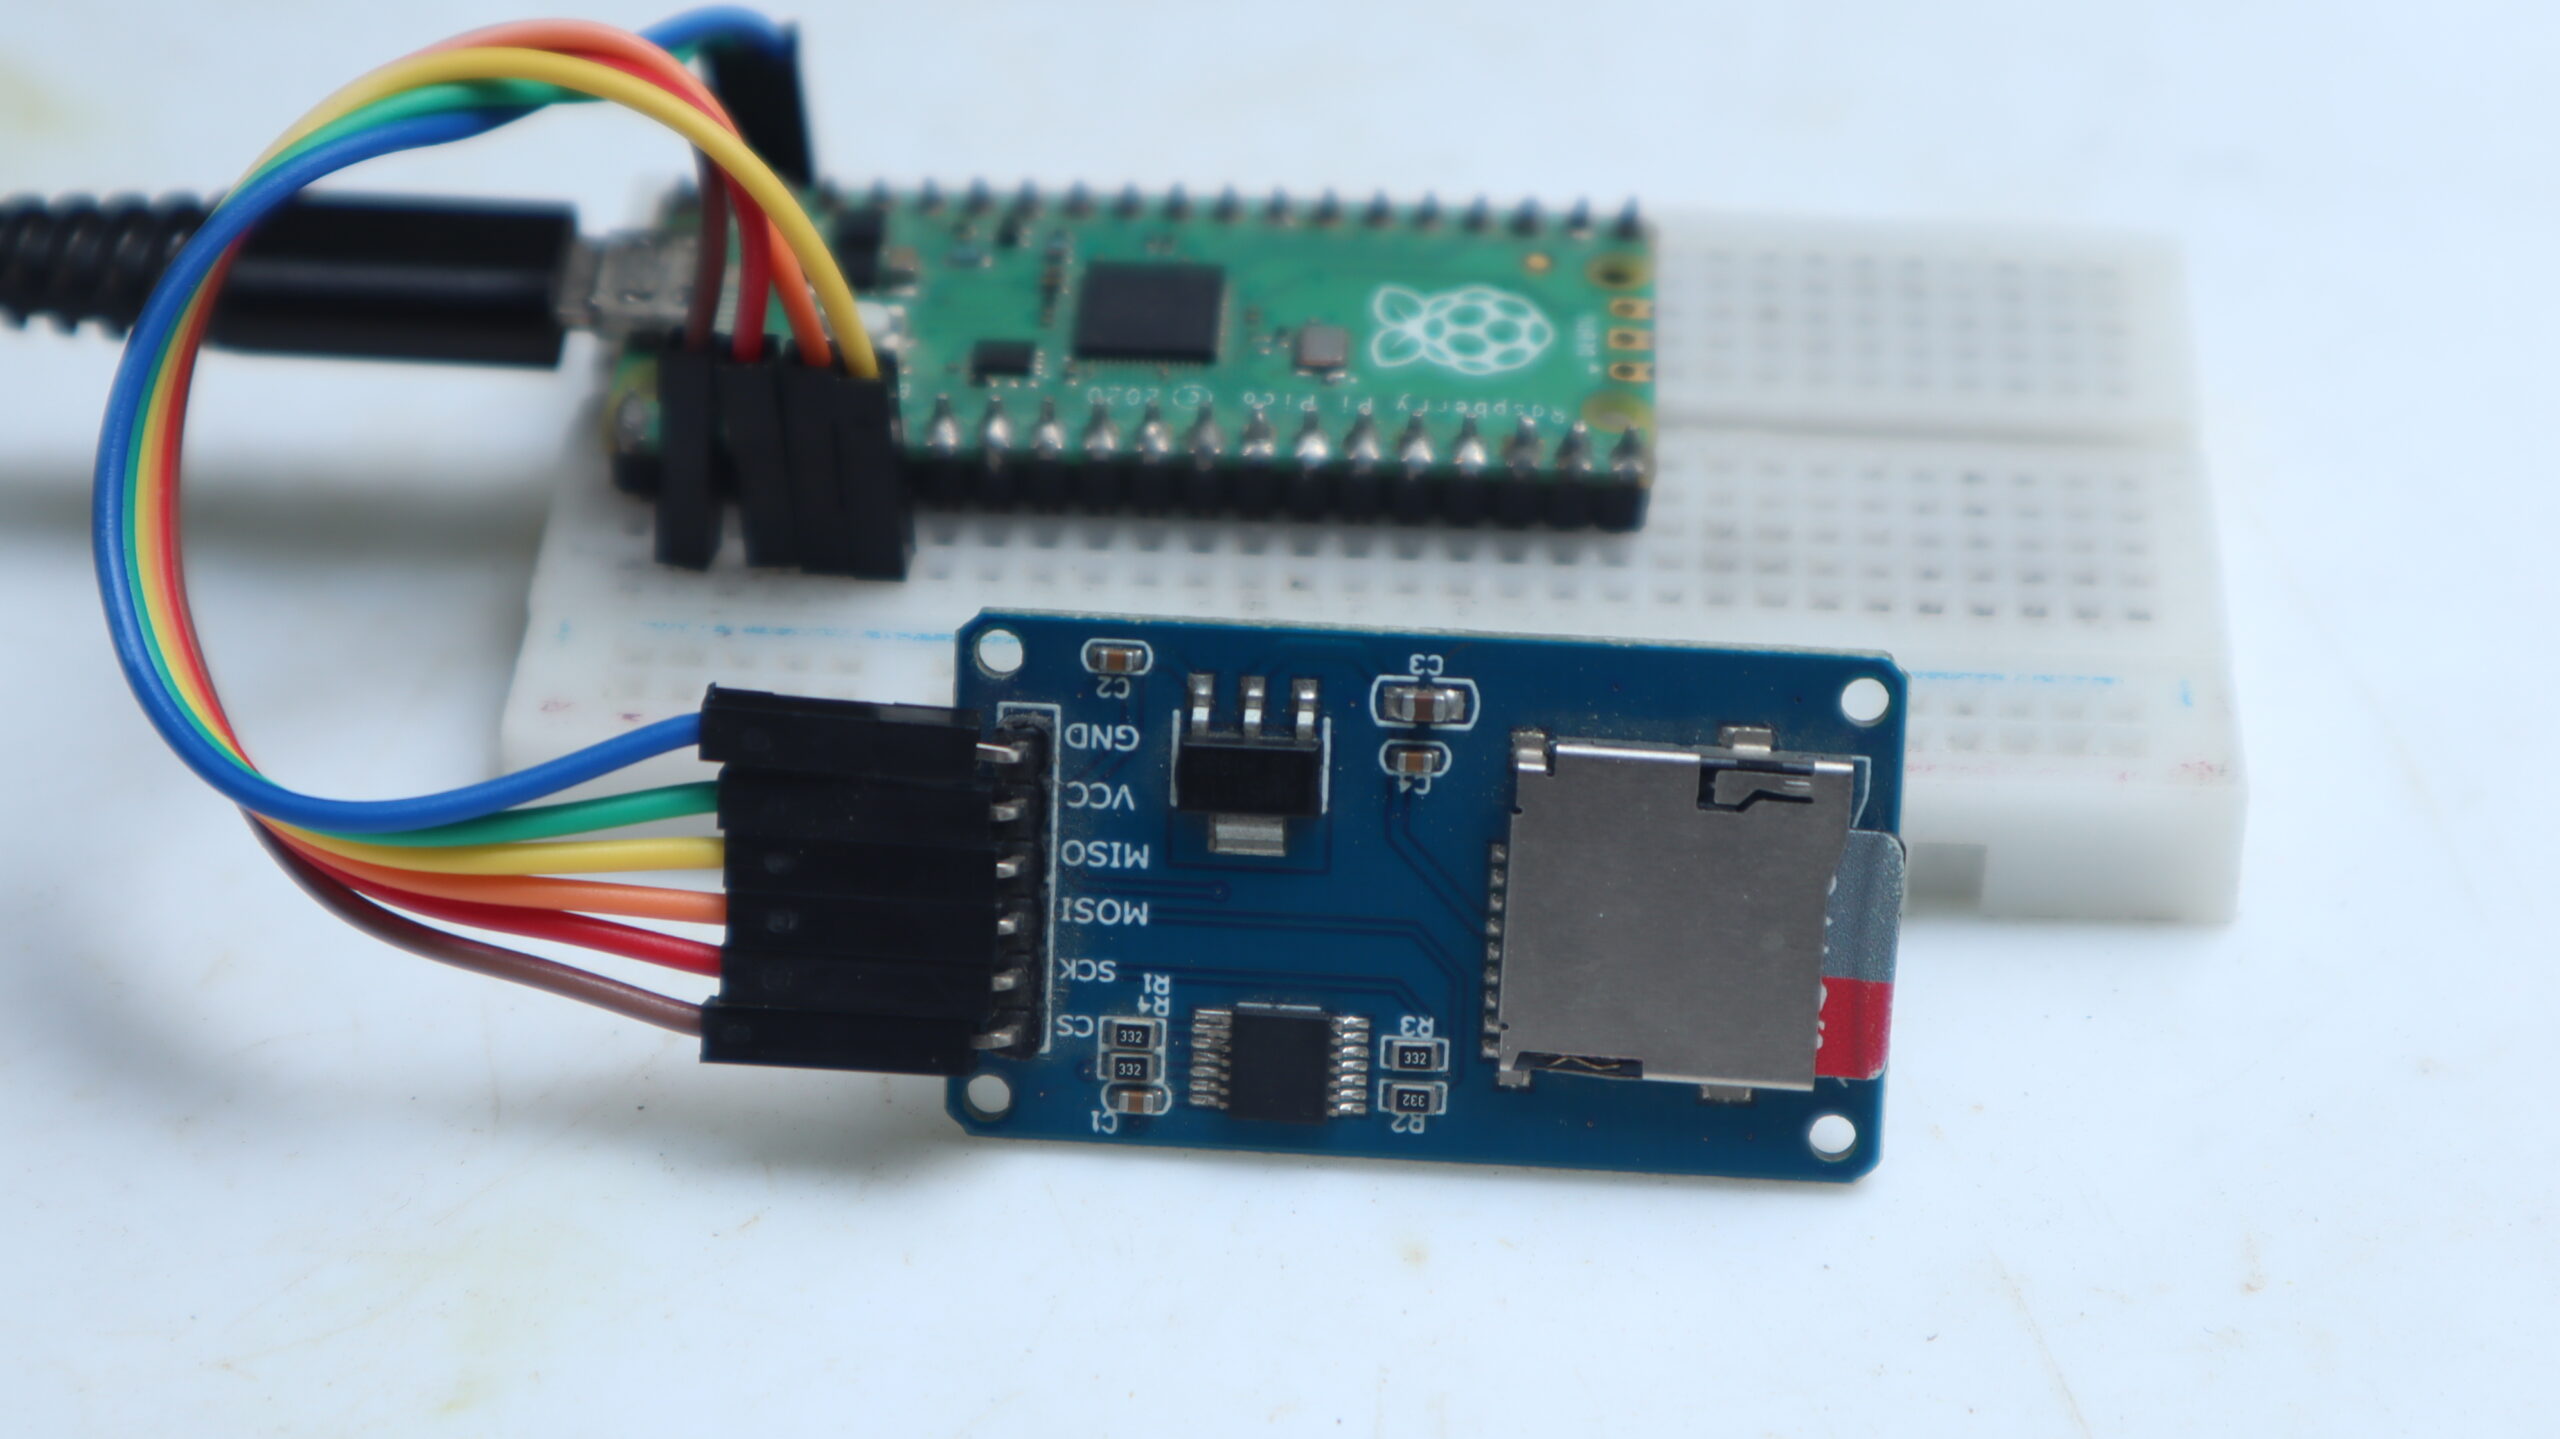 SD Card Module and Raspberry Pi Pico